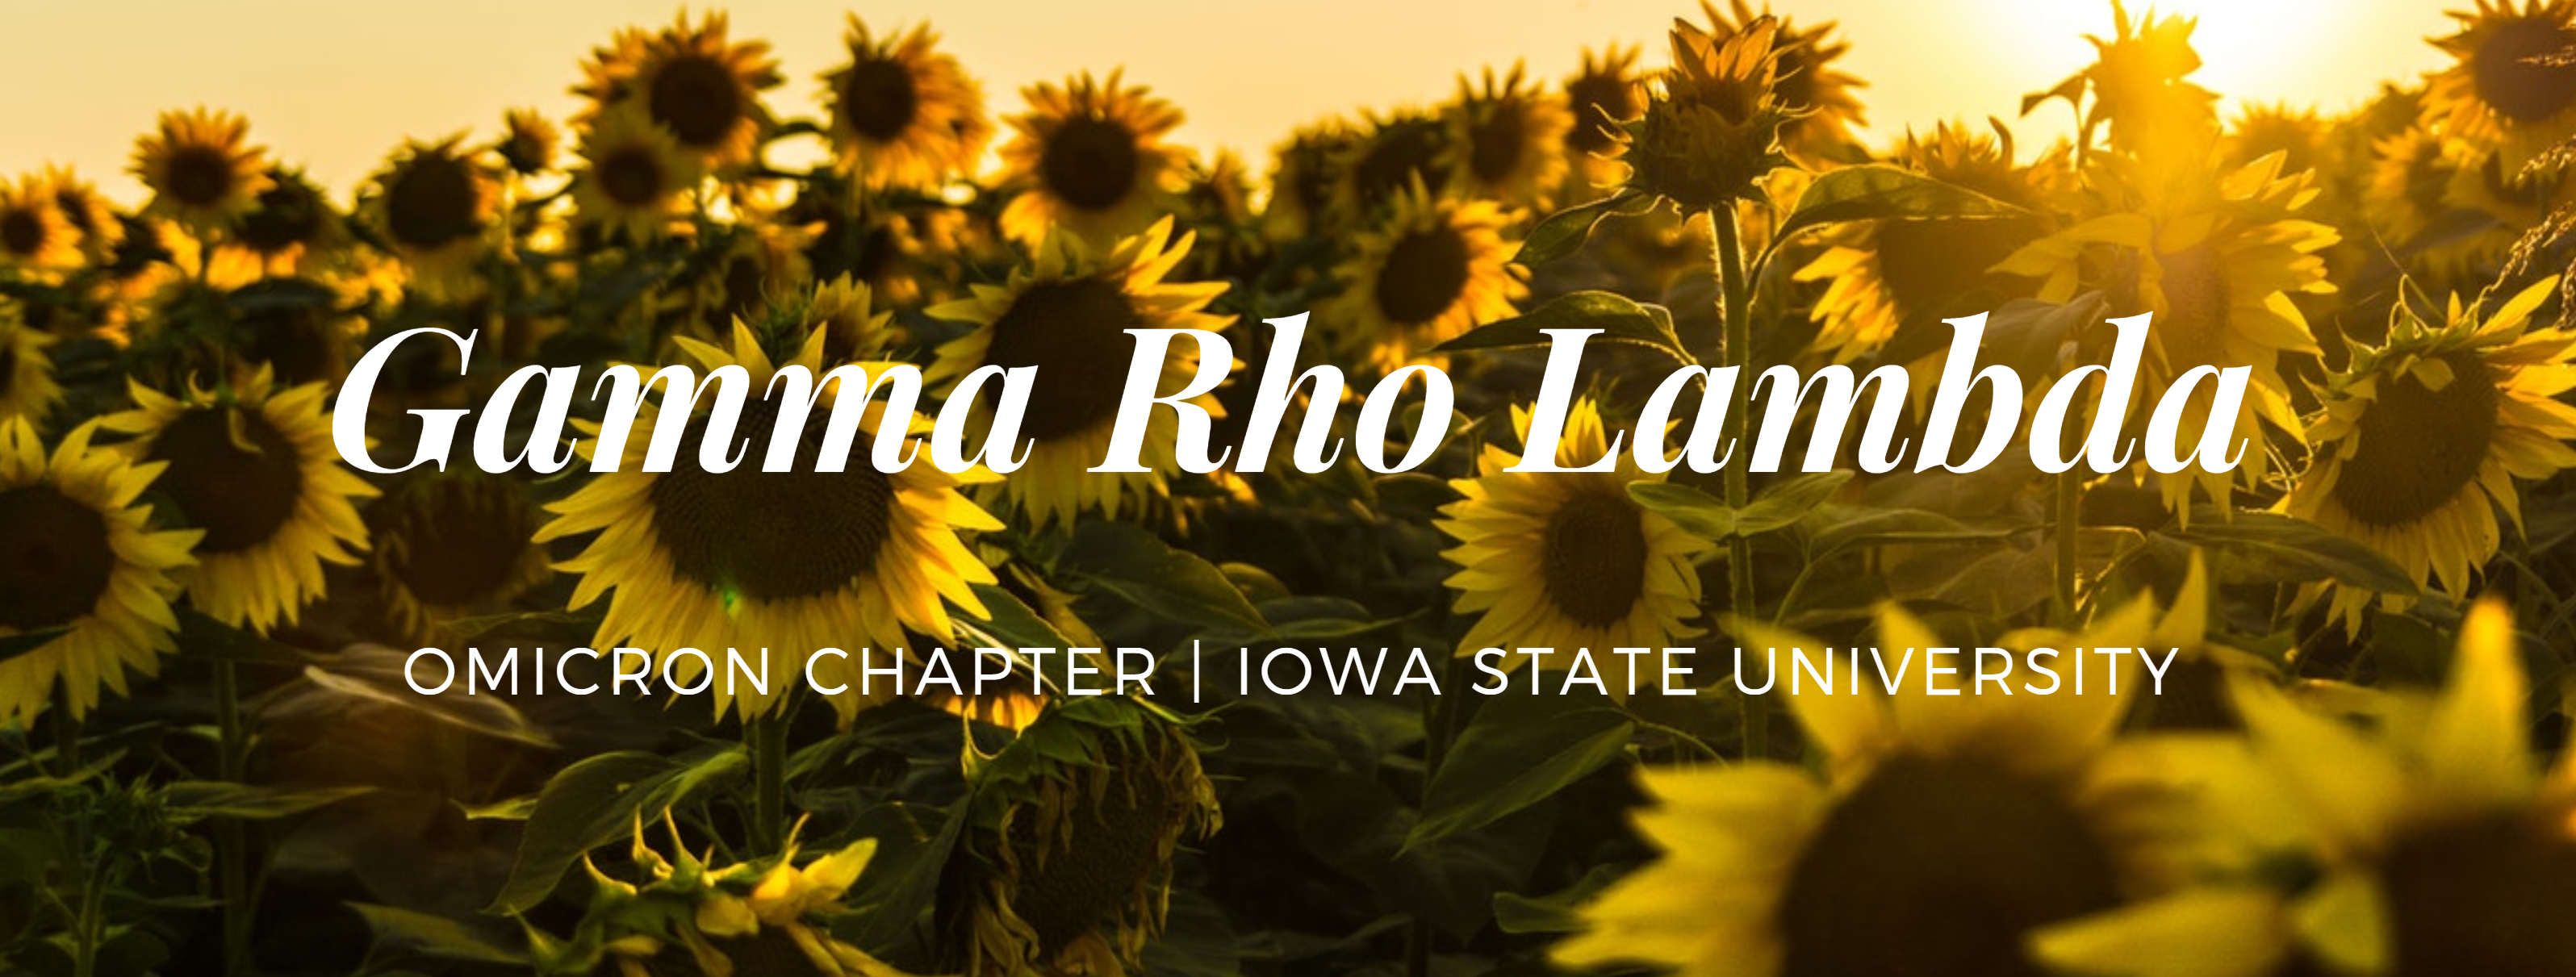 Gamma Rho Lambda - Omicron Chapter Header